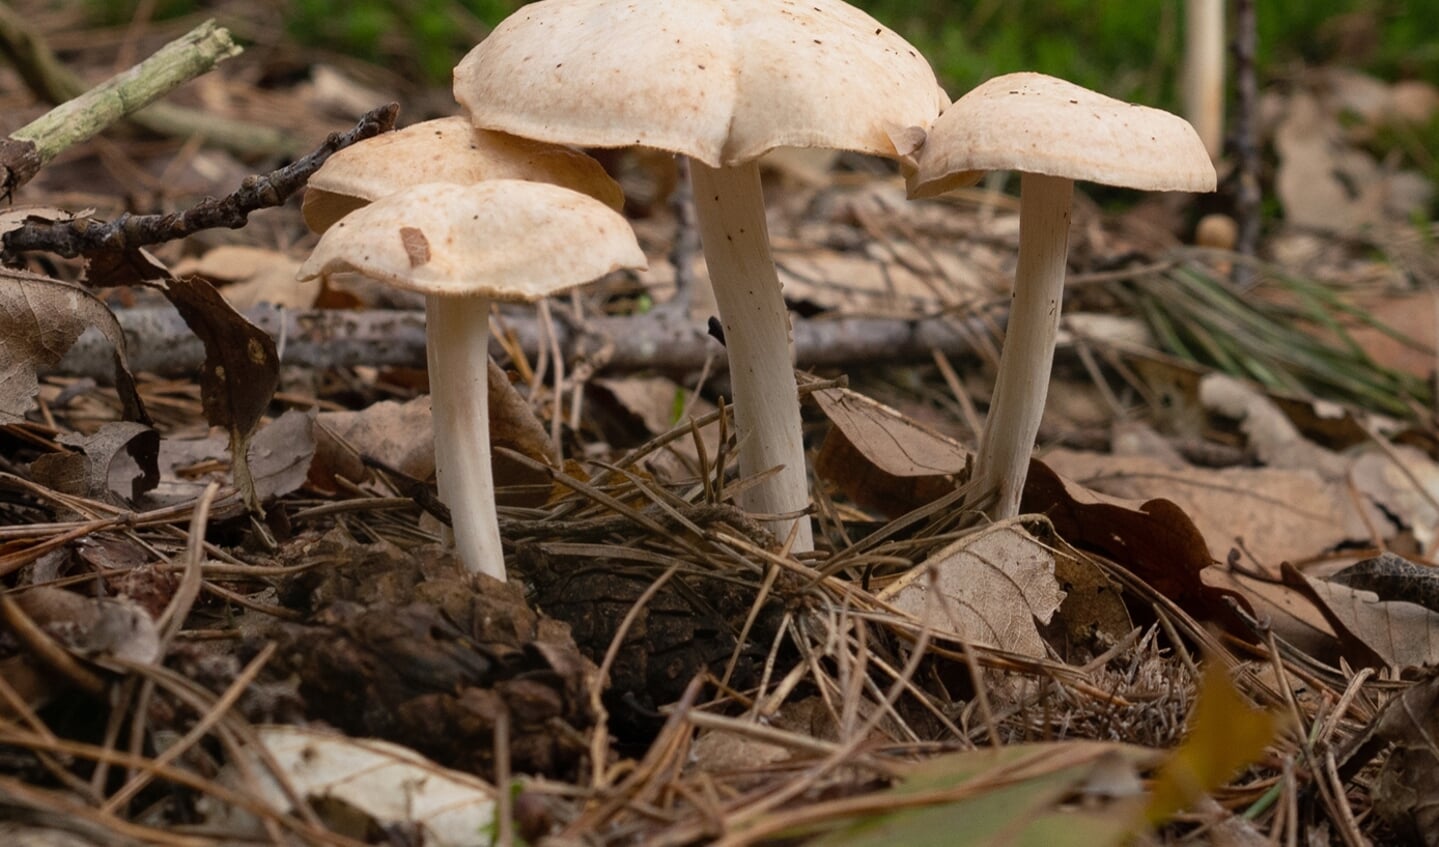 paddenstoelen in hun omgeving 